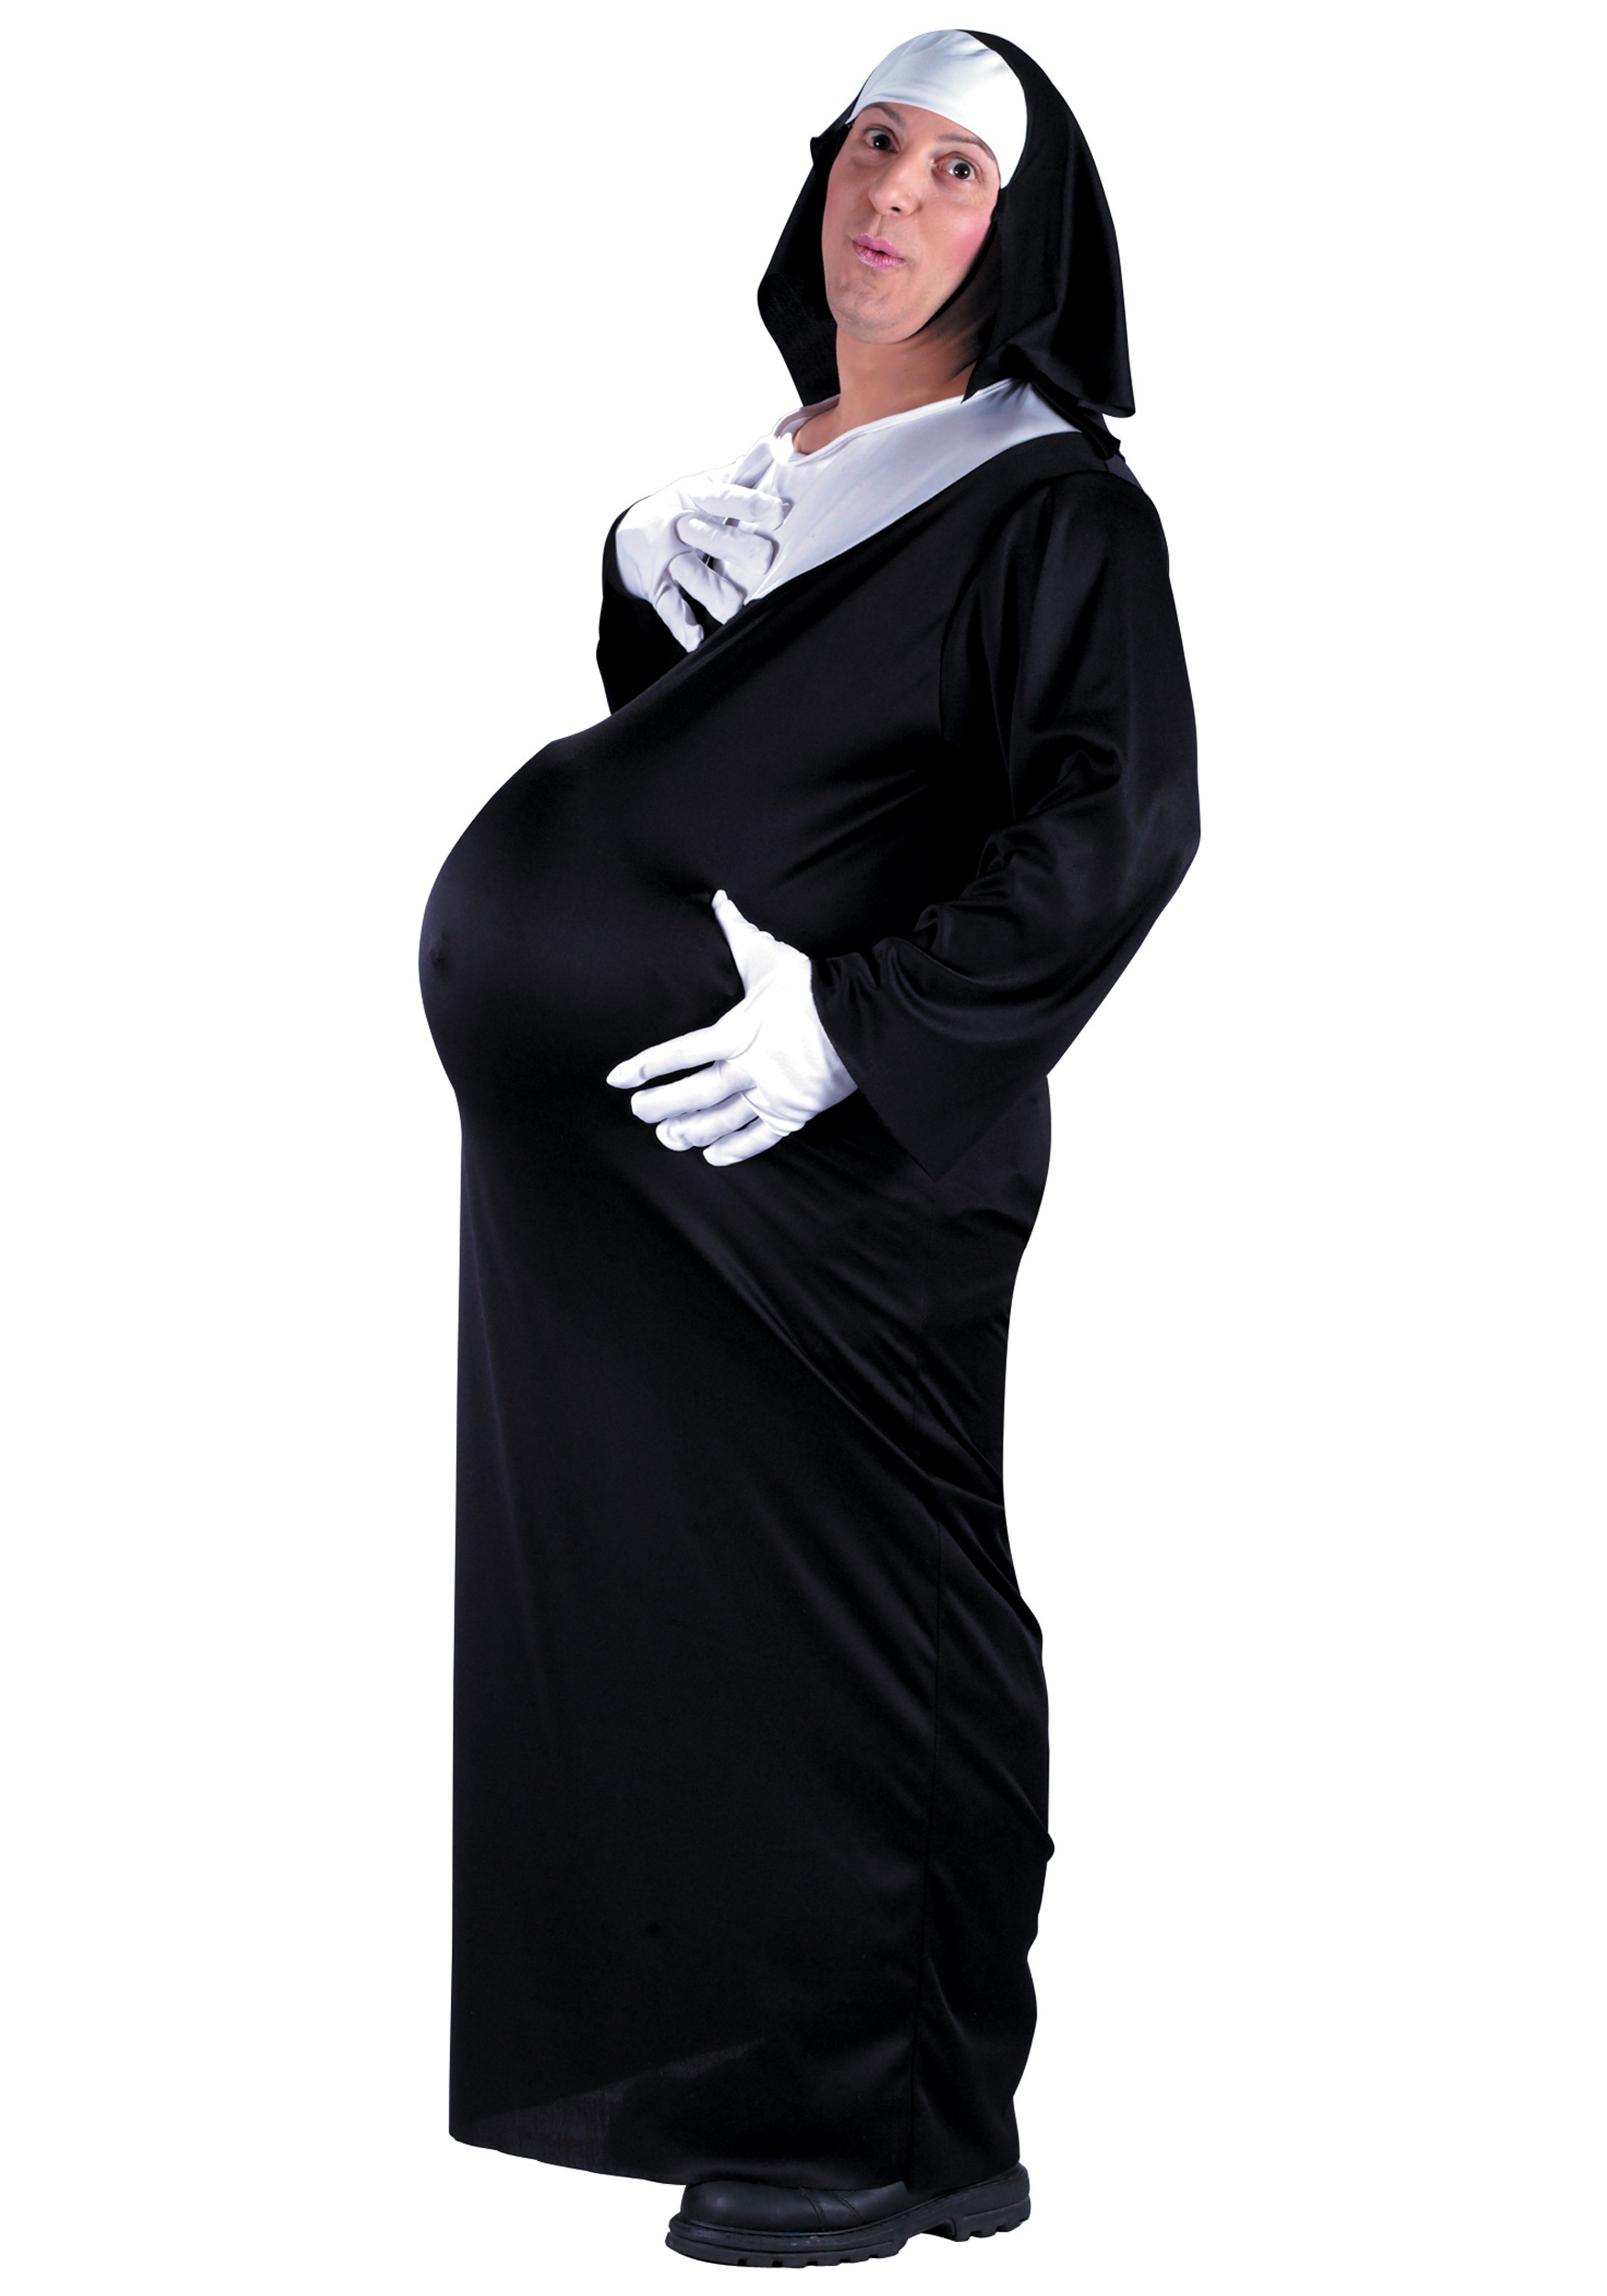 Pregnant Nuns 31